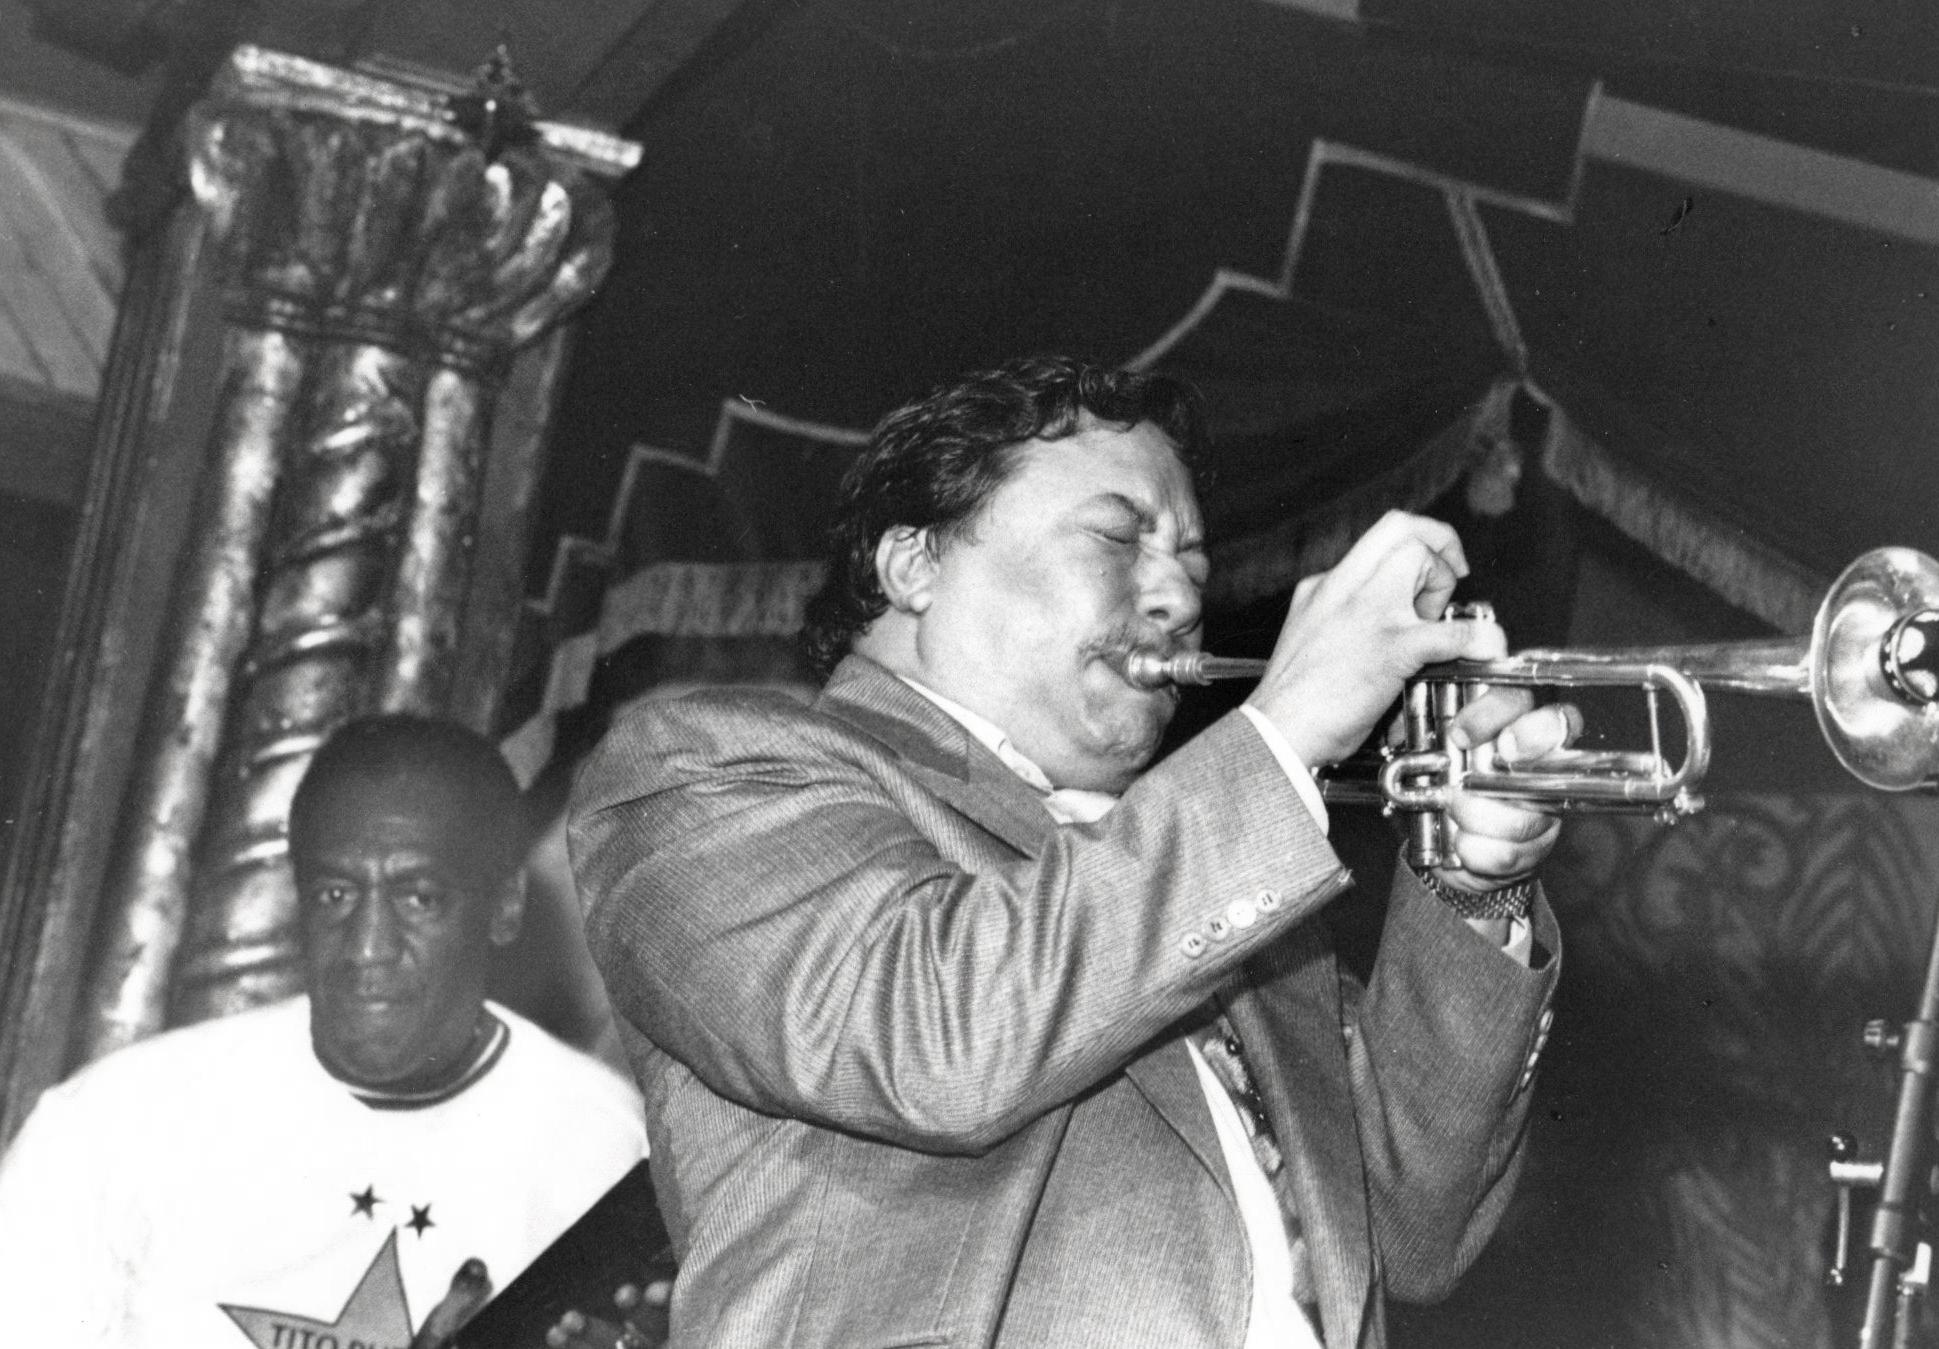 Enid Farber Portrait Photograph - Arturo Sandoval Playing Trumpet on Stage Vintage Original Photograph